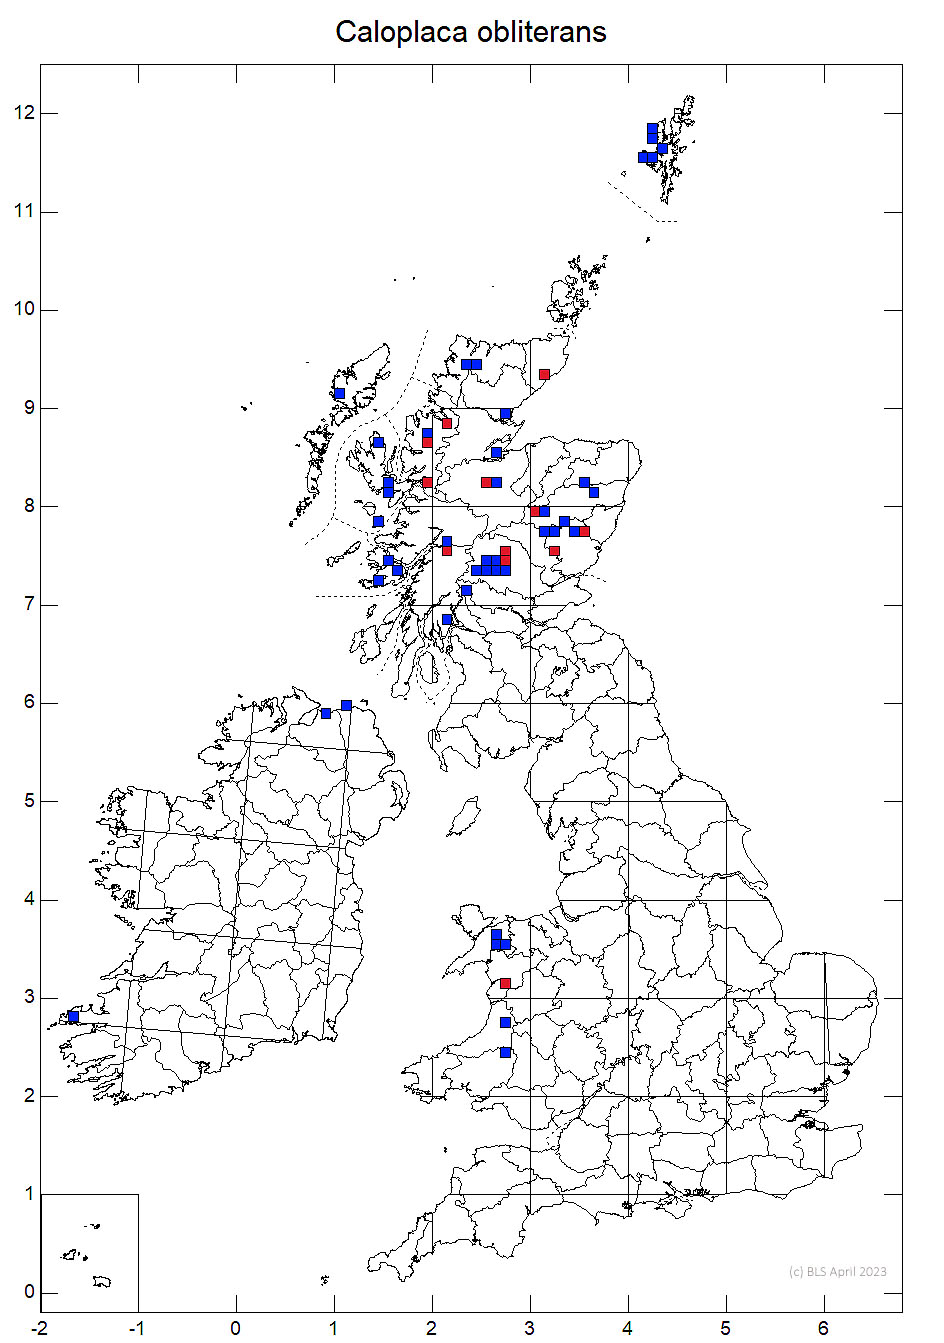 Caloplaca obliterans 10km sq distribution map